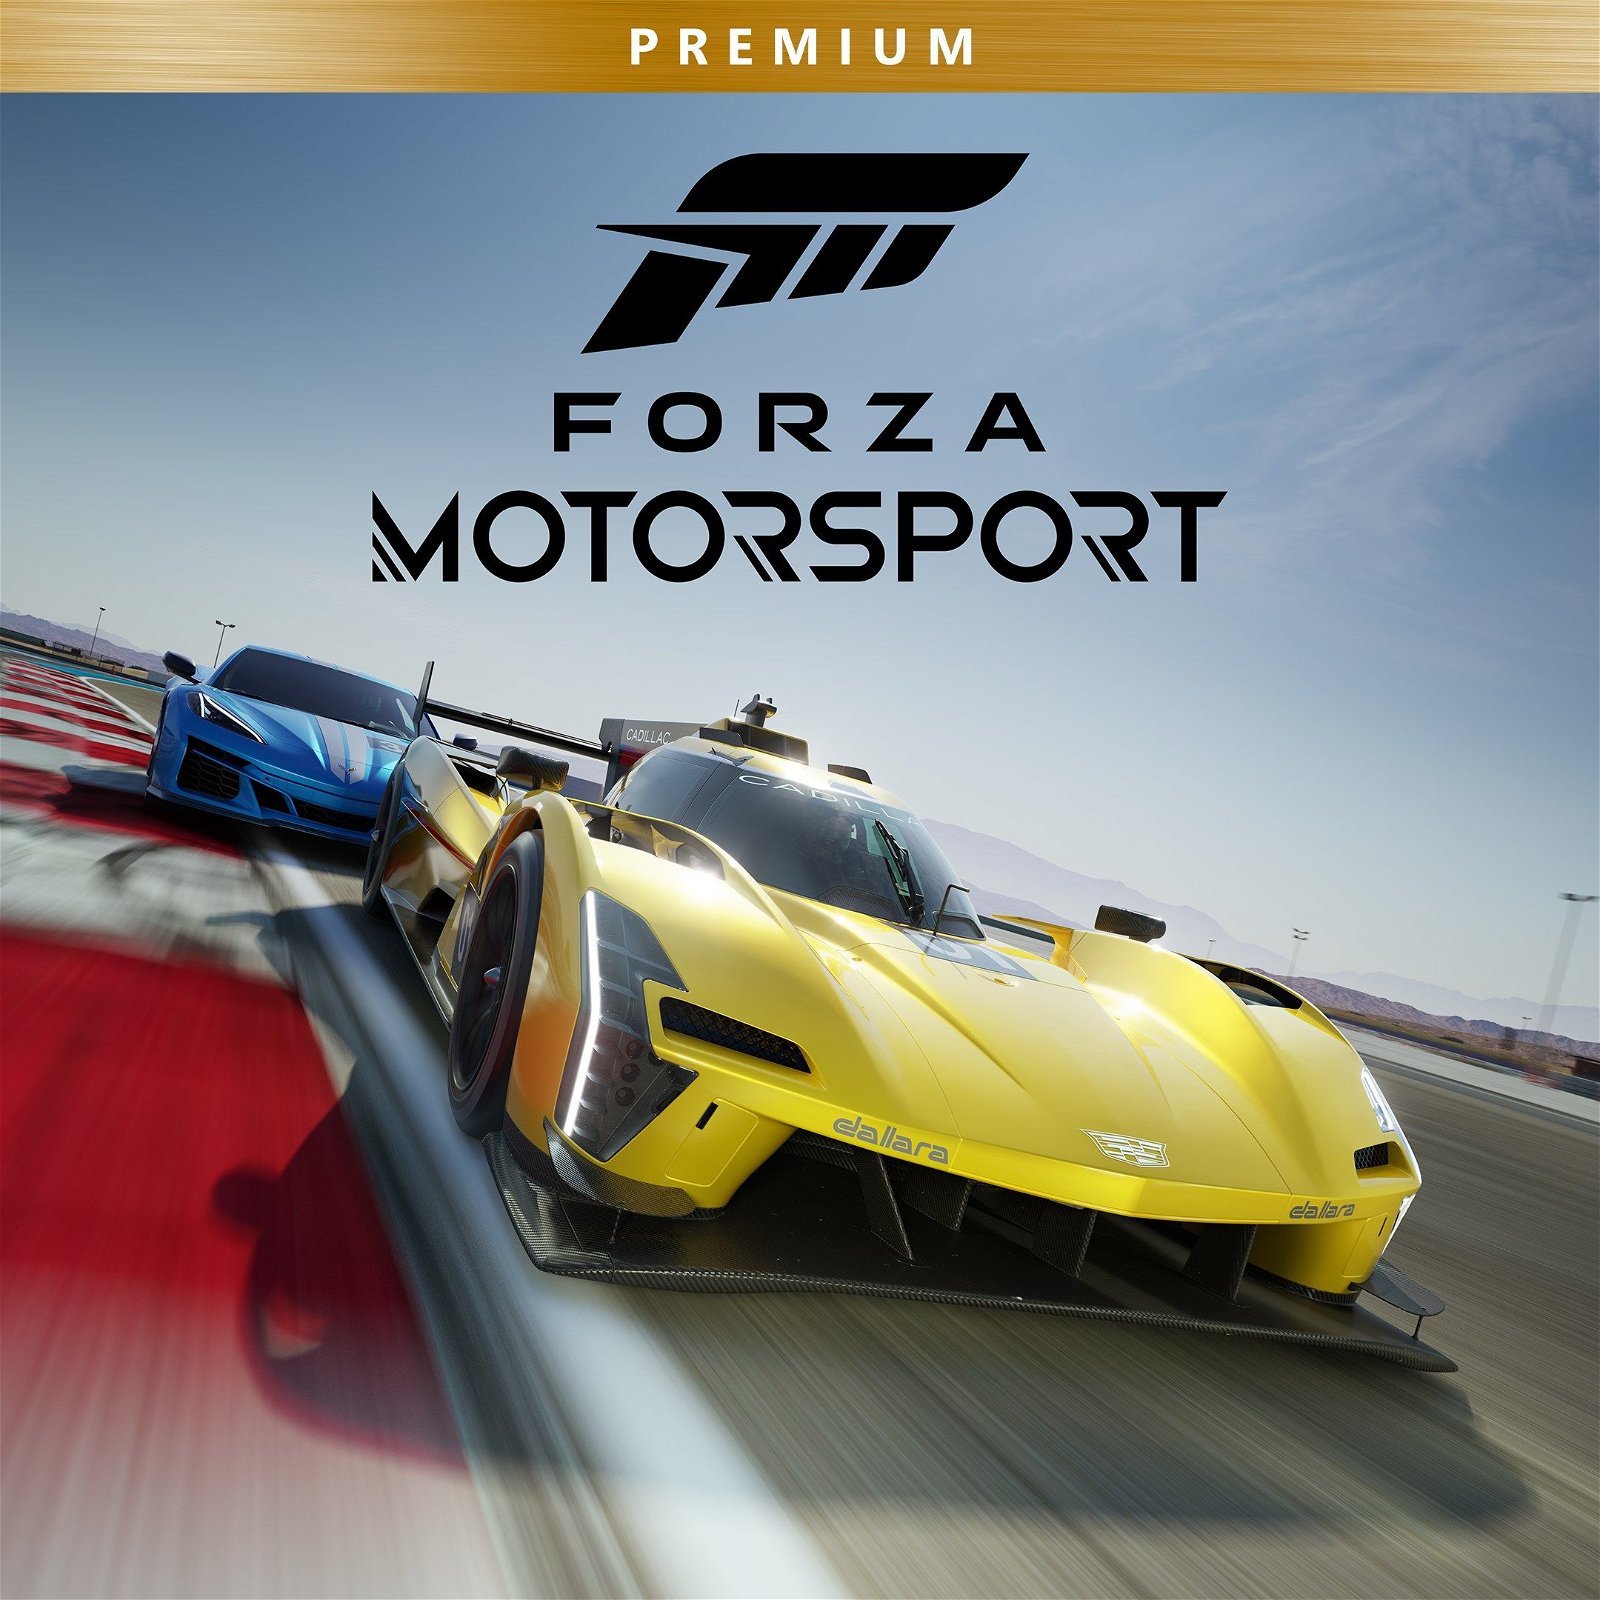 Image of Forza Motorsport Premium Edition